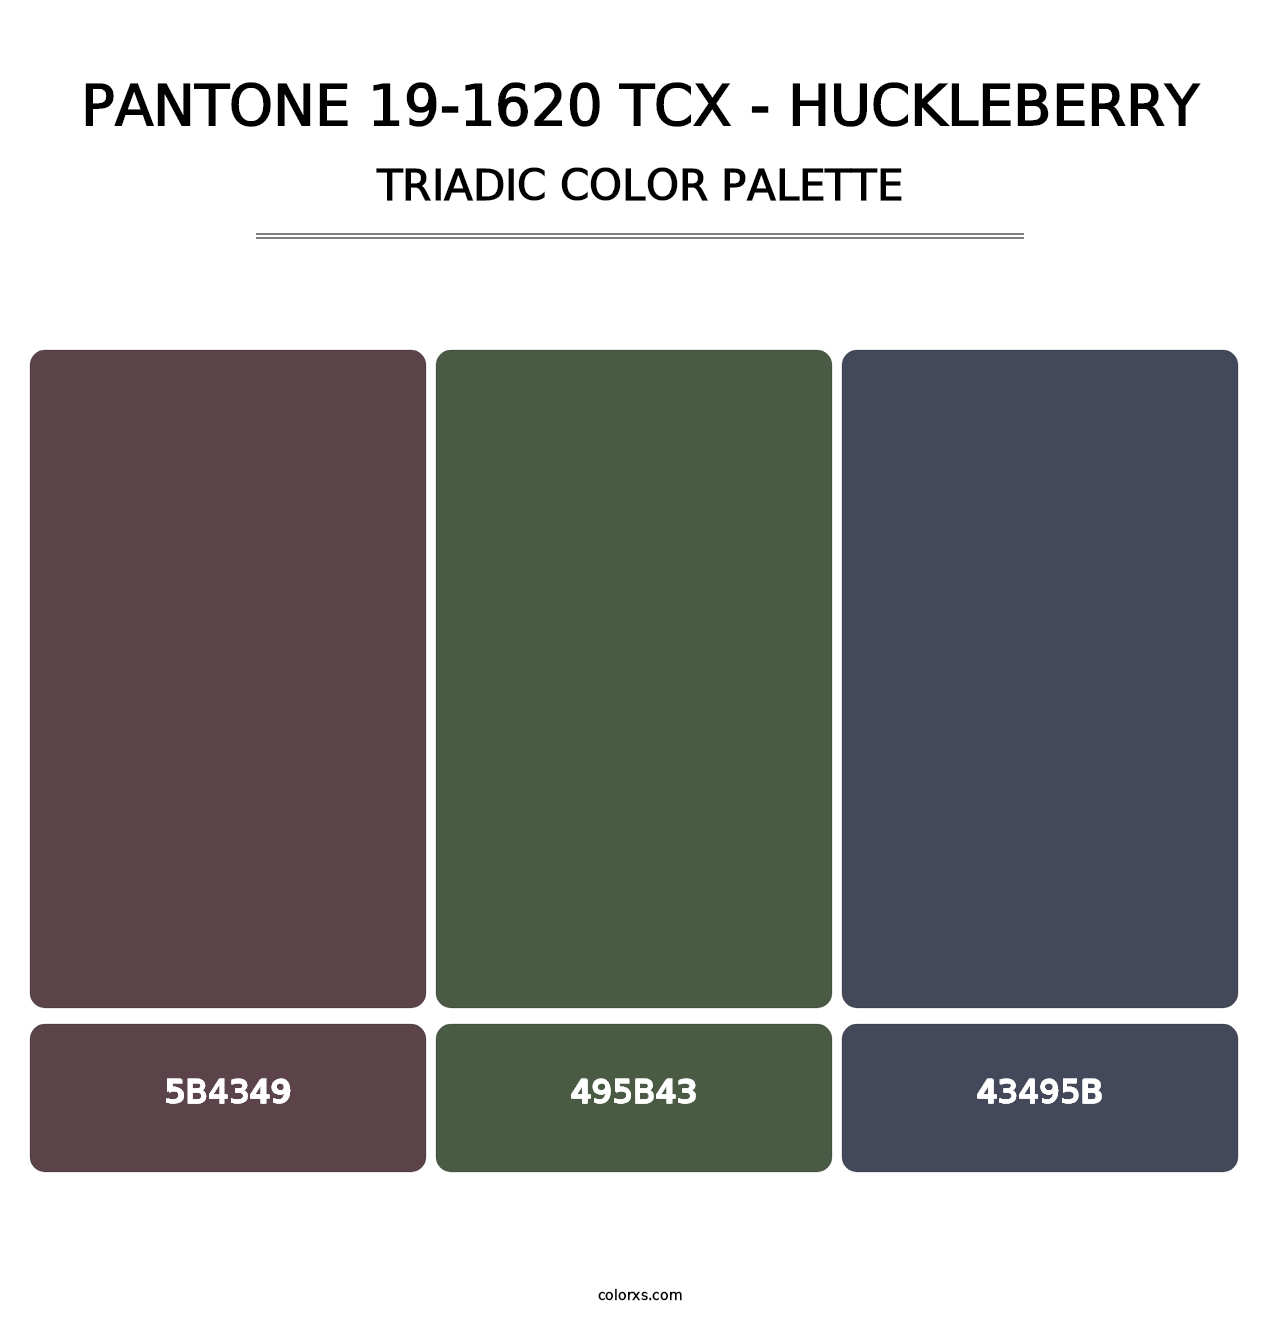 PANTONE 19-1620 TCX - Huckleberry - Triadic Color Palette